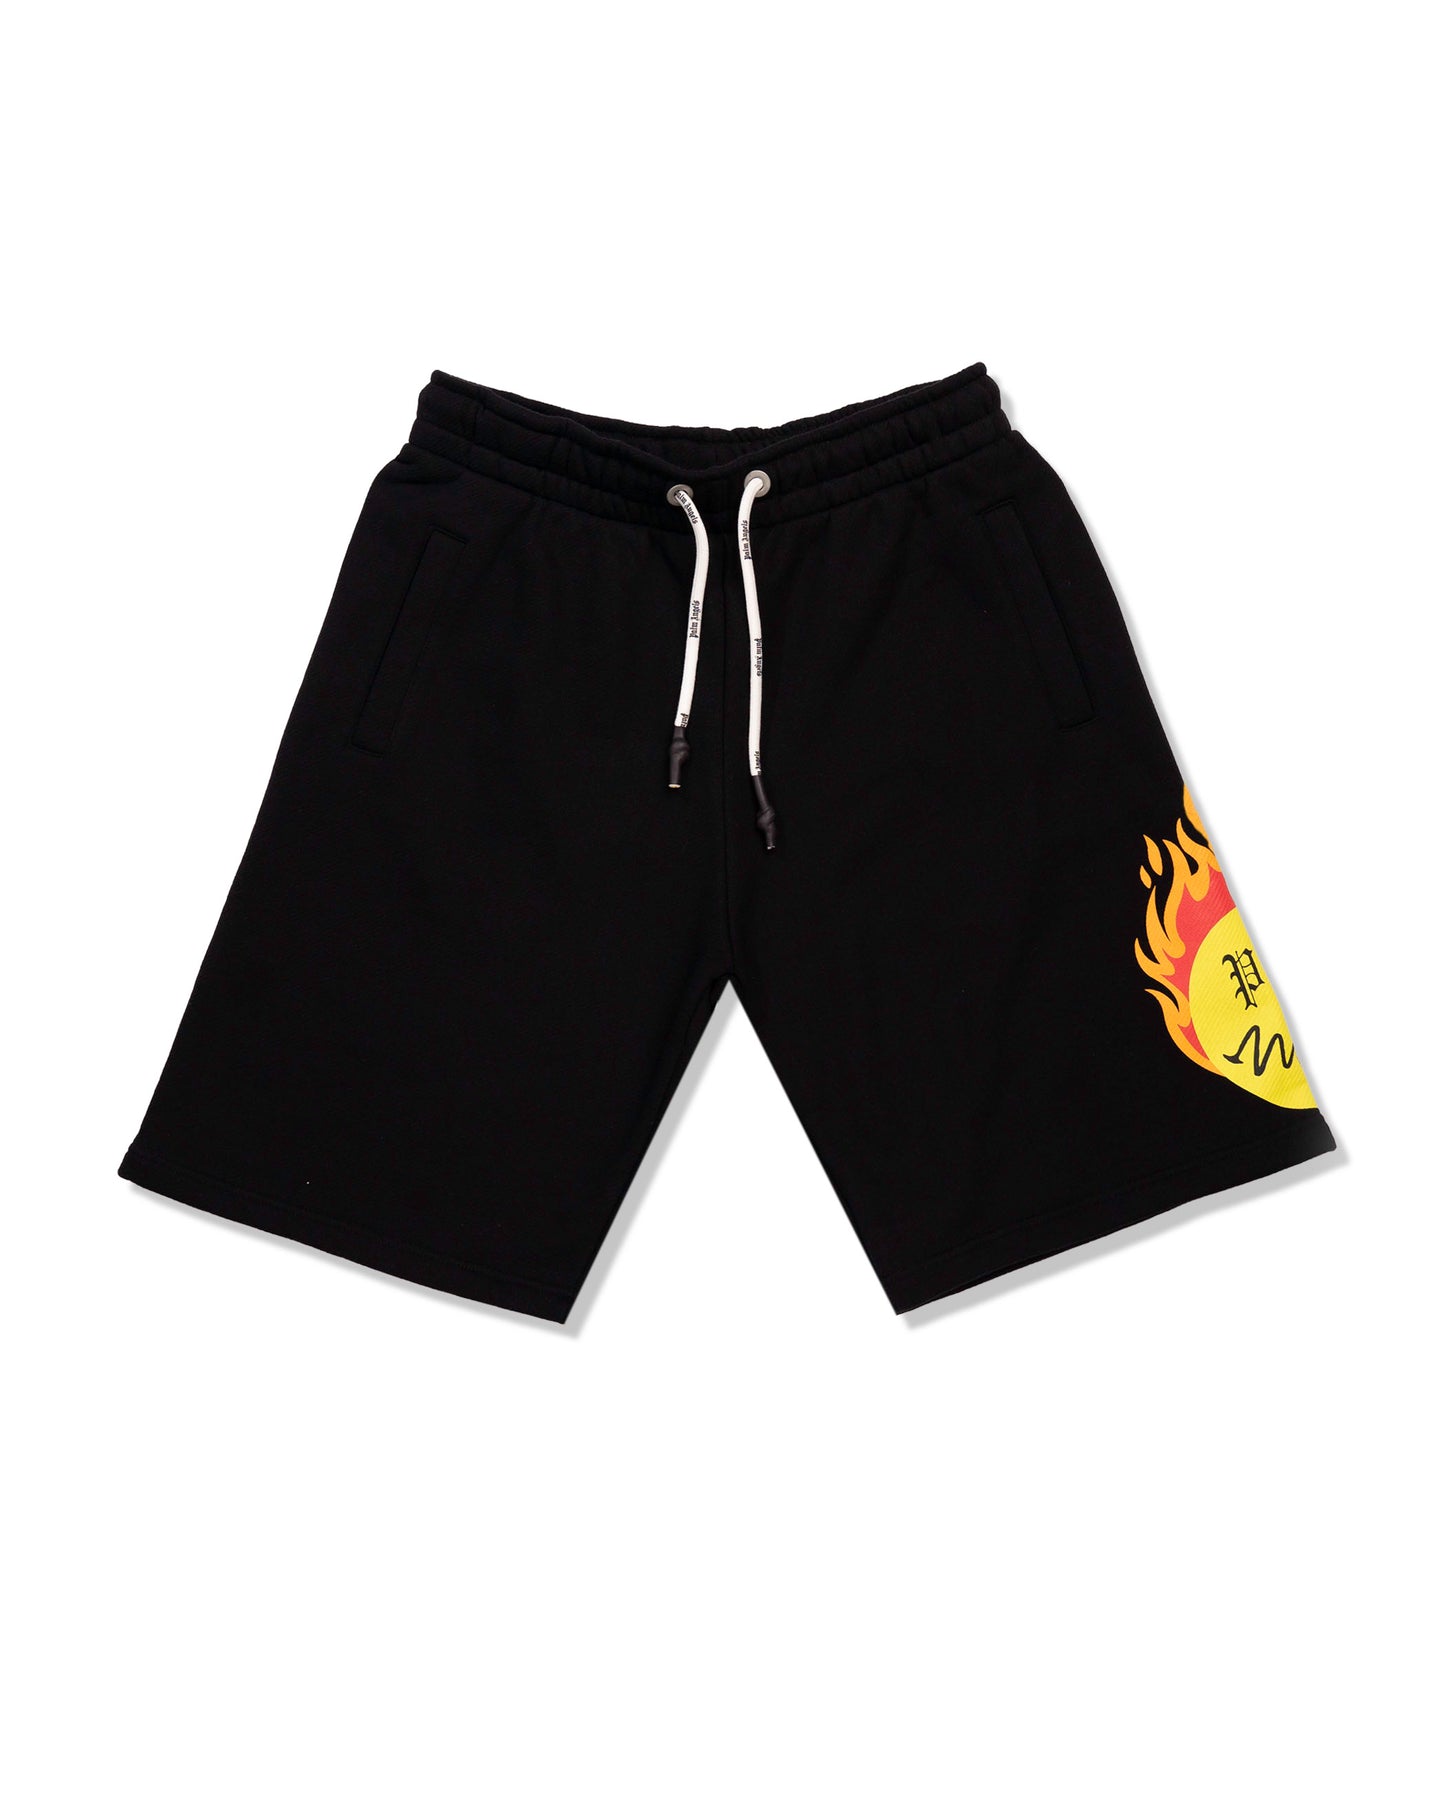 Black Flame Smiley Print Shorts